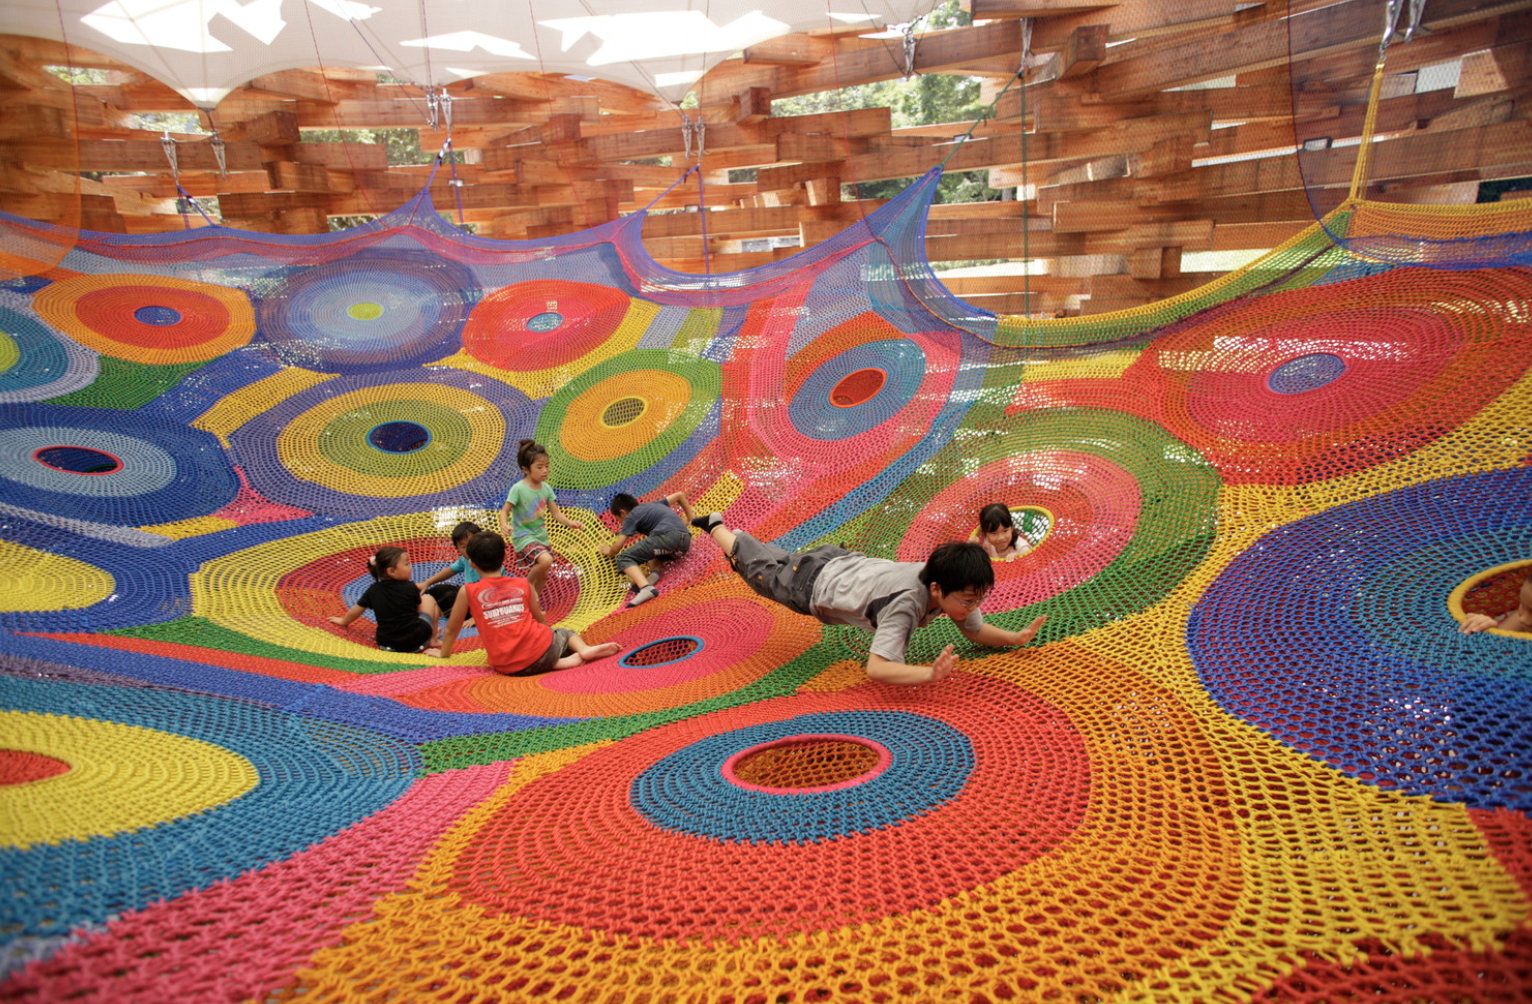 Hand-knitted playground at IFC